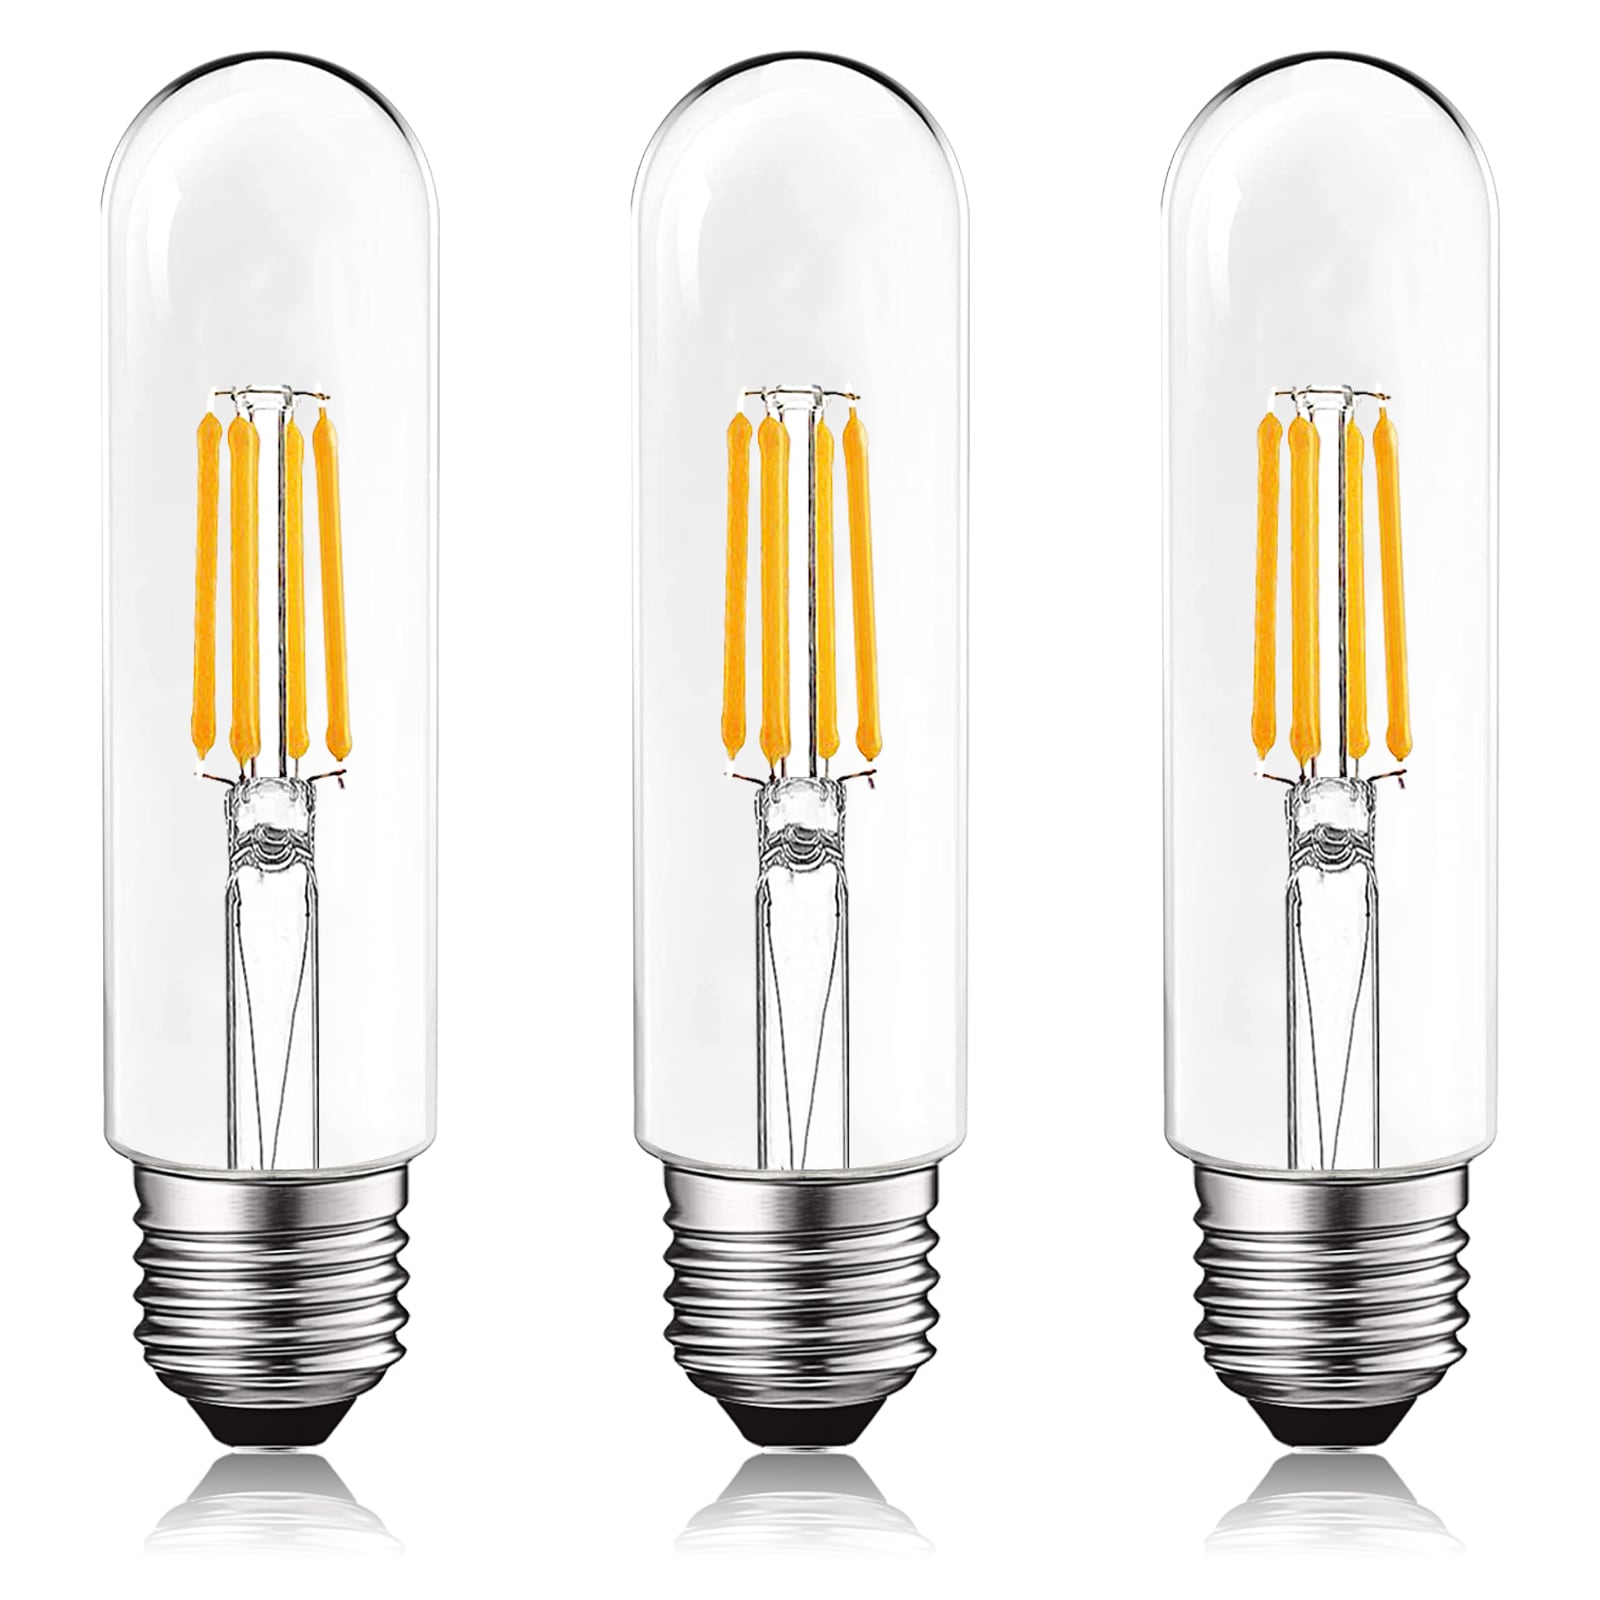 4.5 Watt (60 Watt Equivalent) T9 Dimmable Filament LED Light Bulb